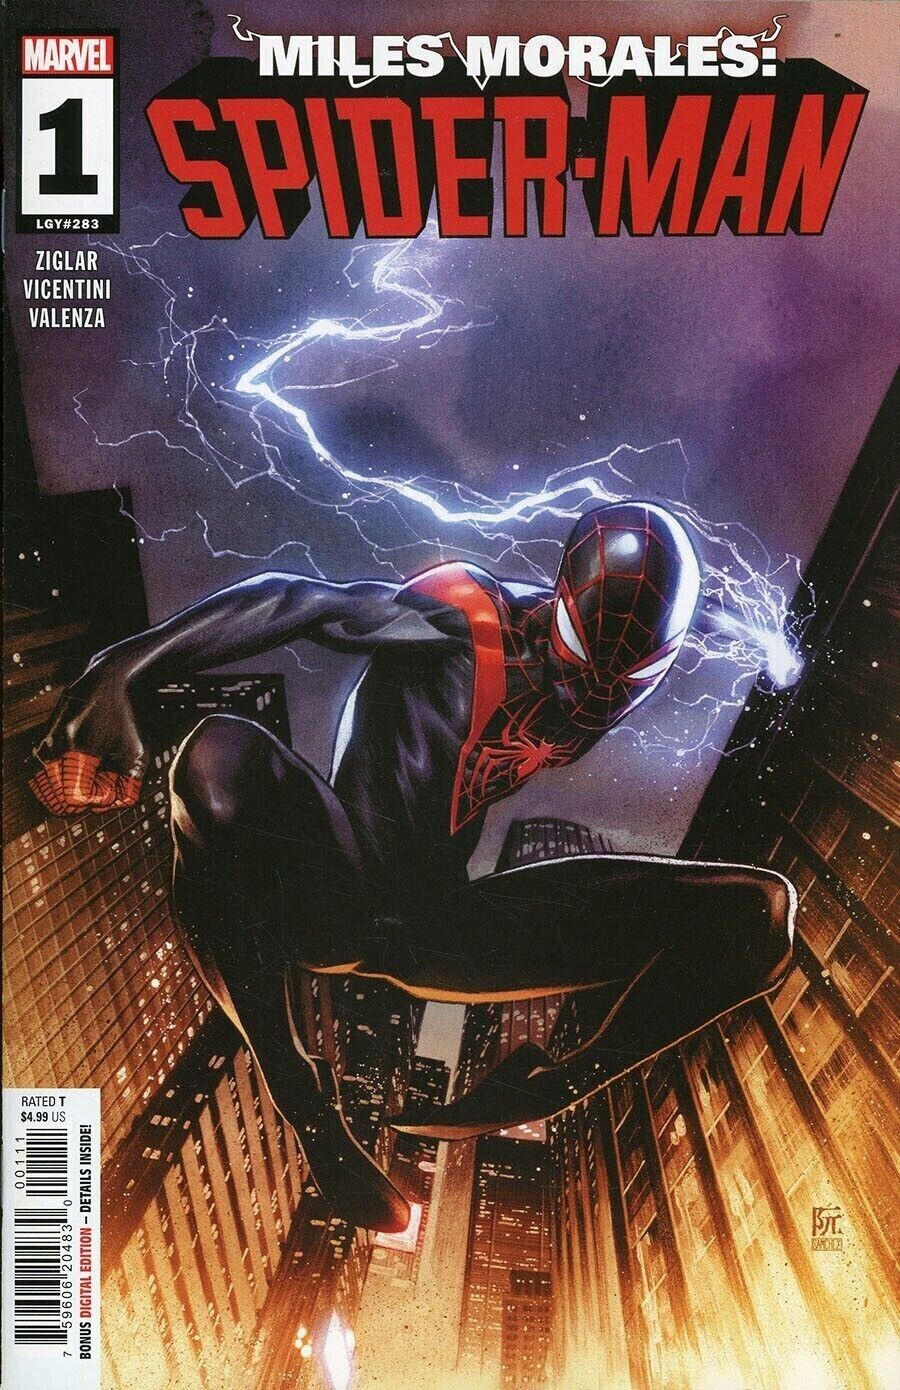 Miles Morales Spider-Man #1 